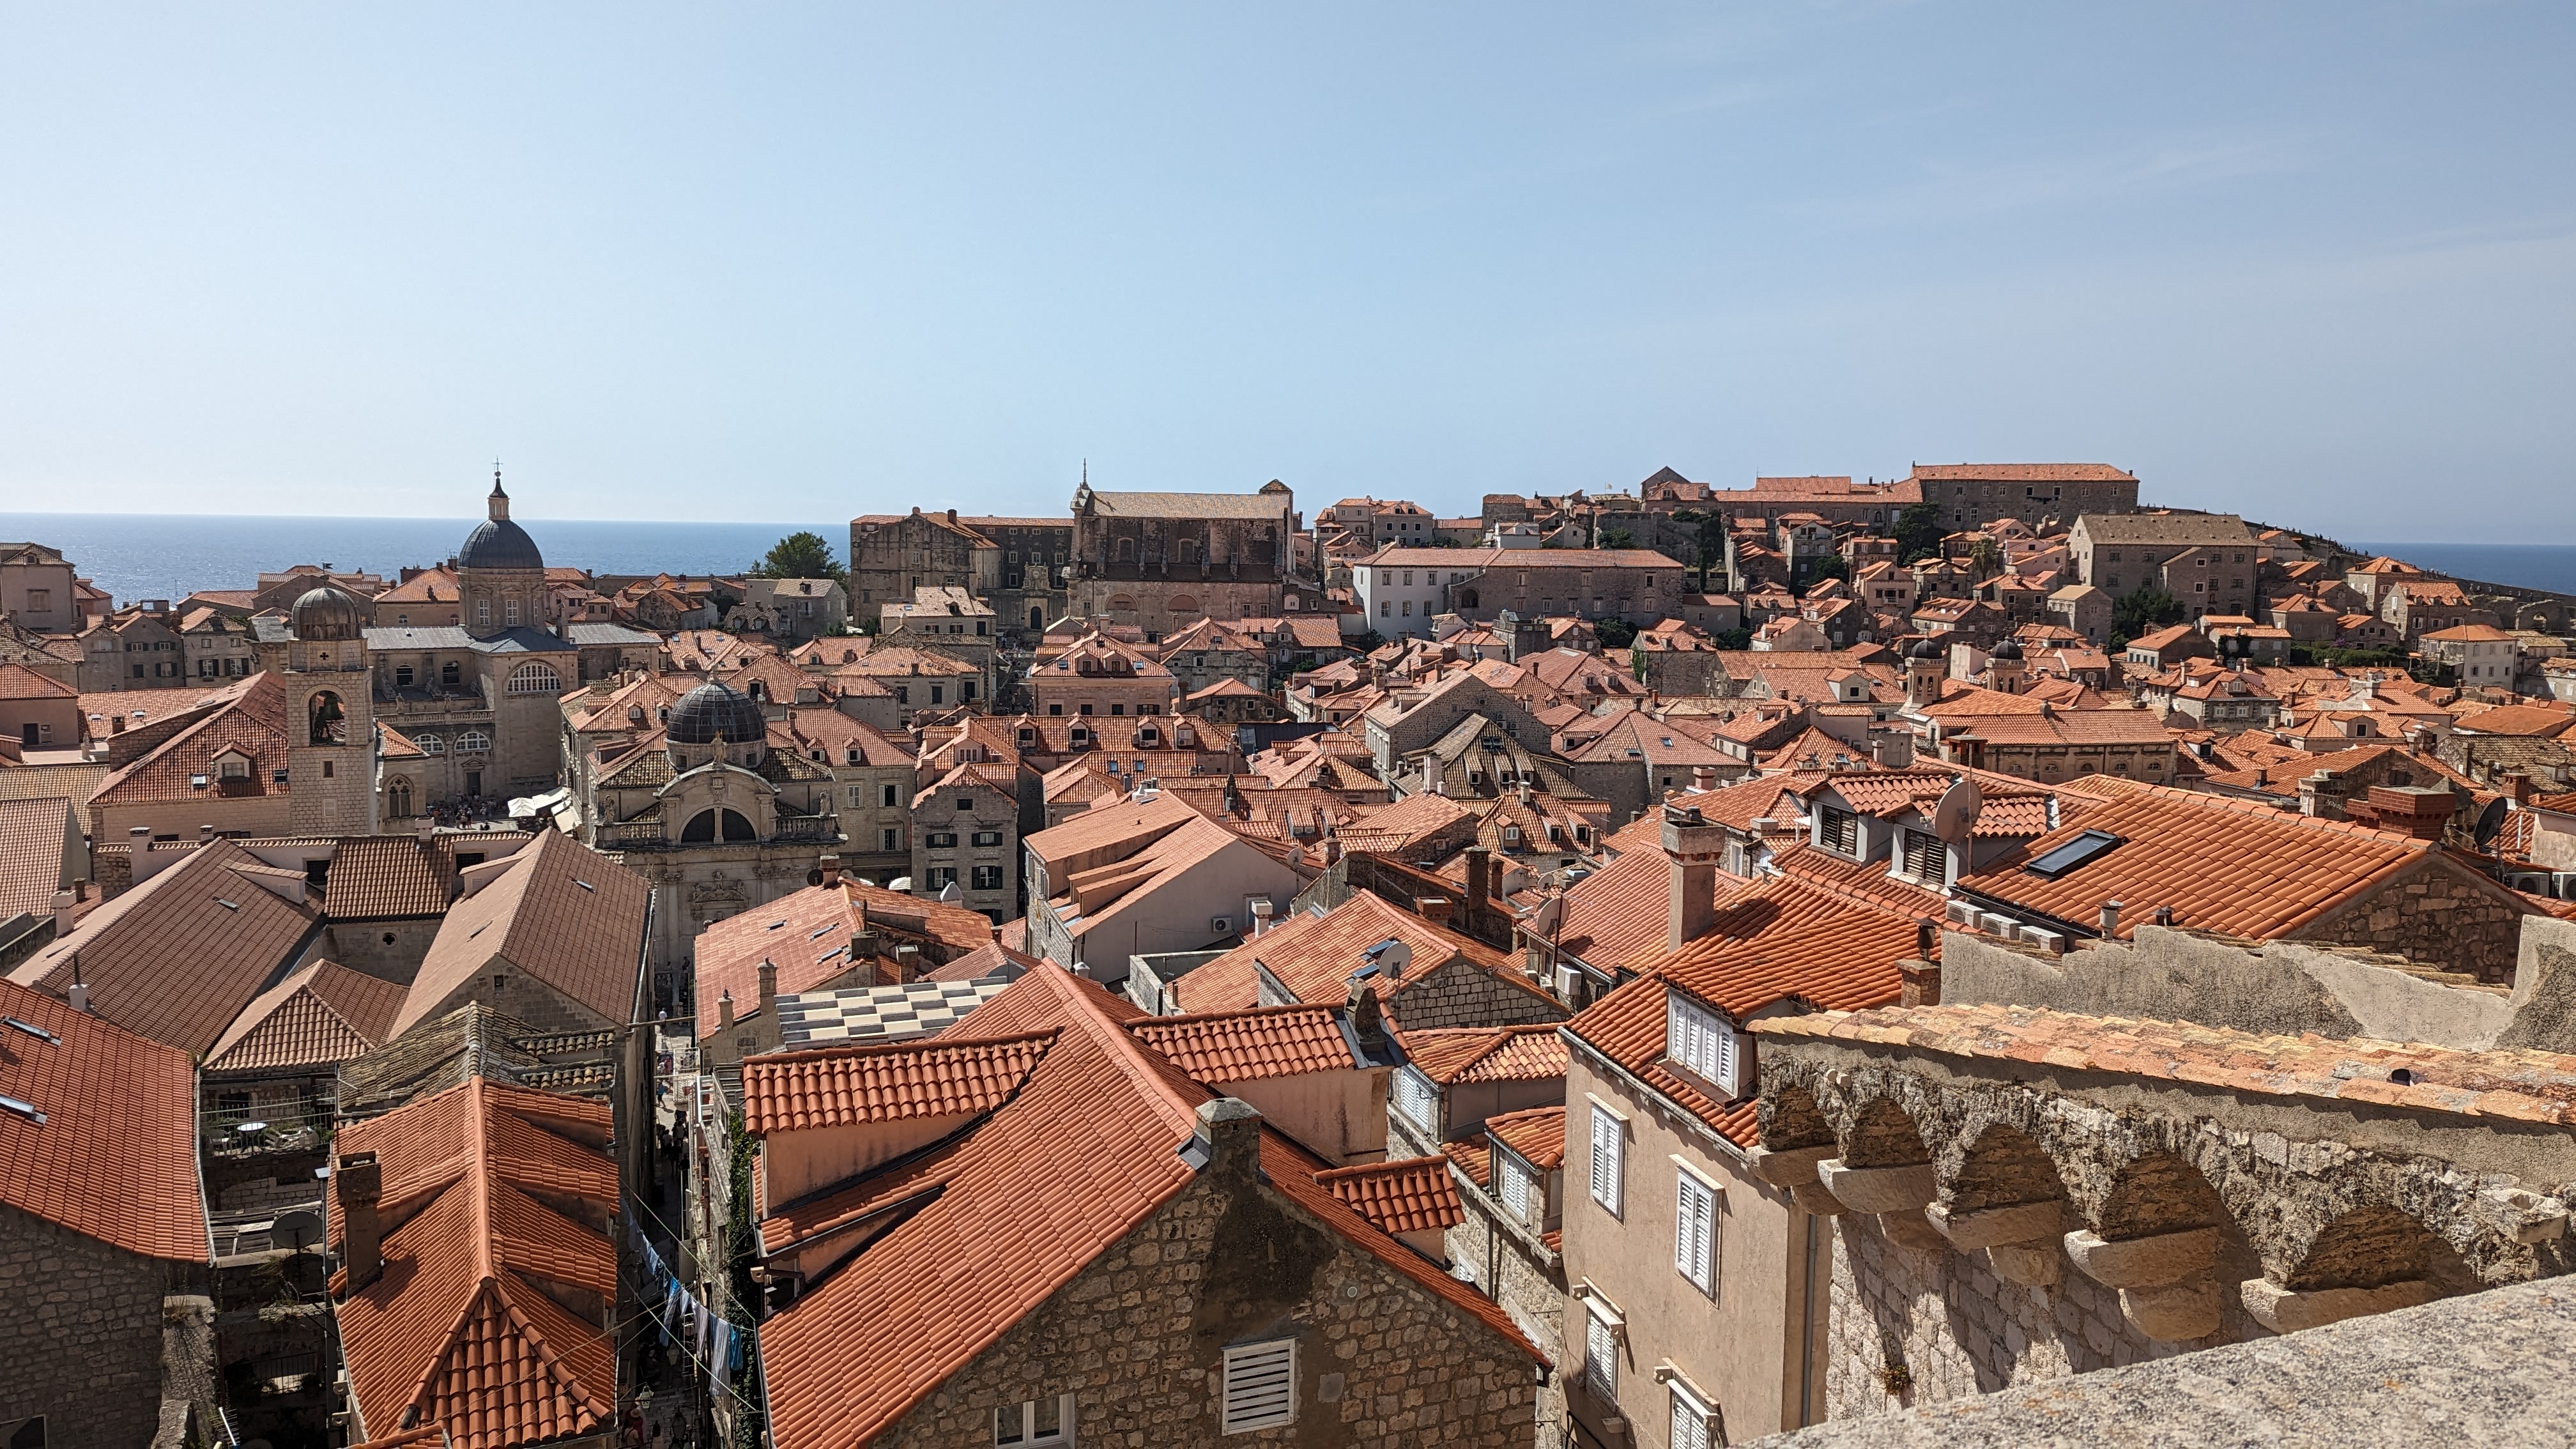 General 4032x2268 Dubrovnik rooftops village building cityscape